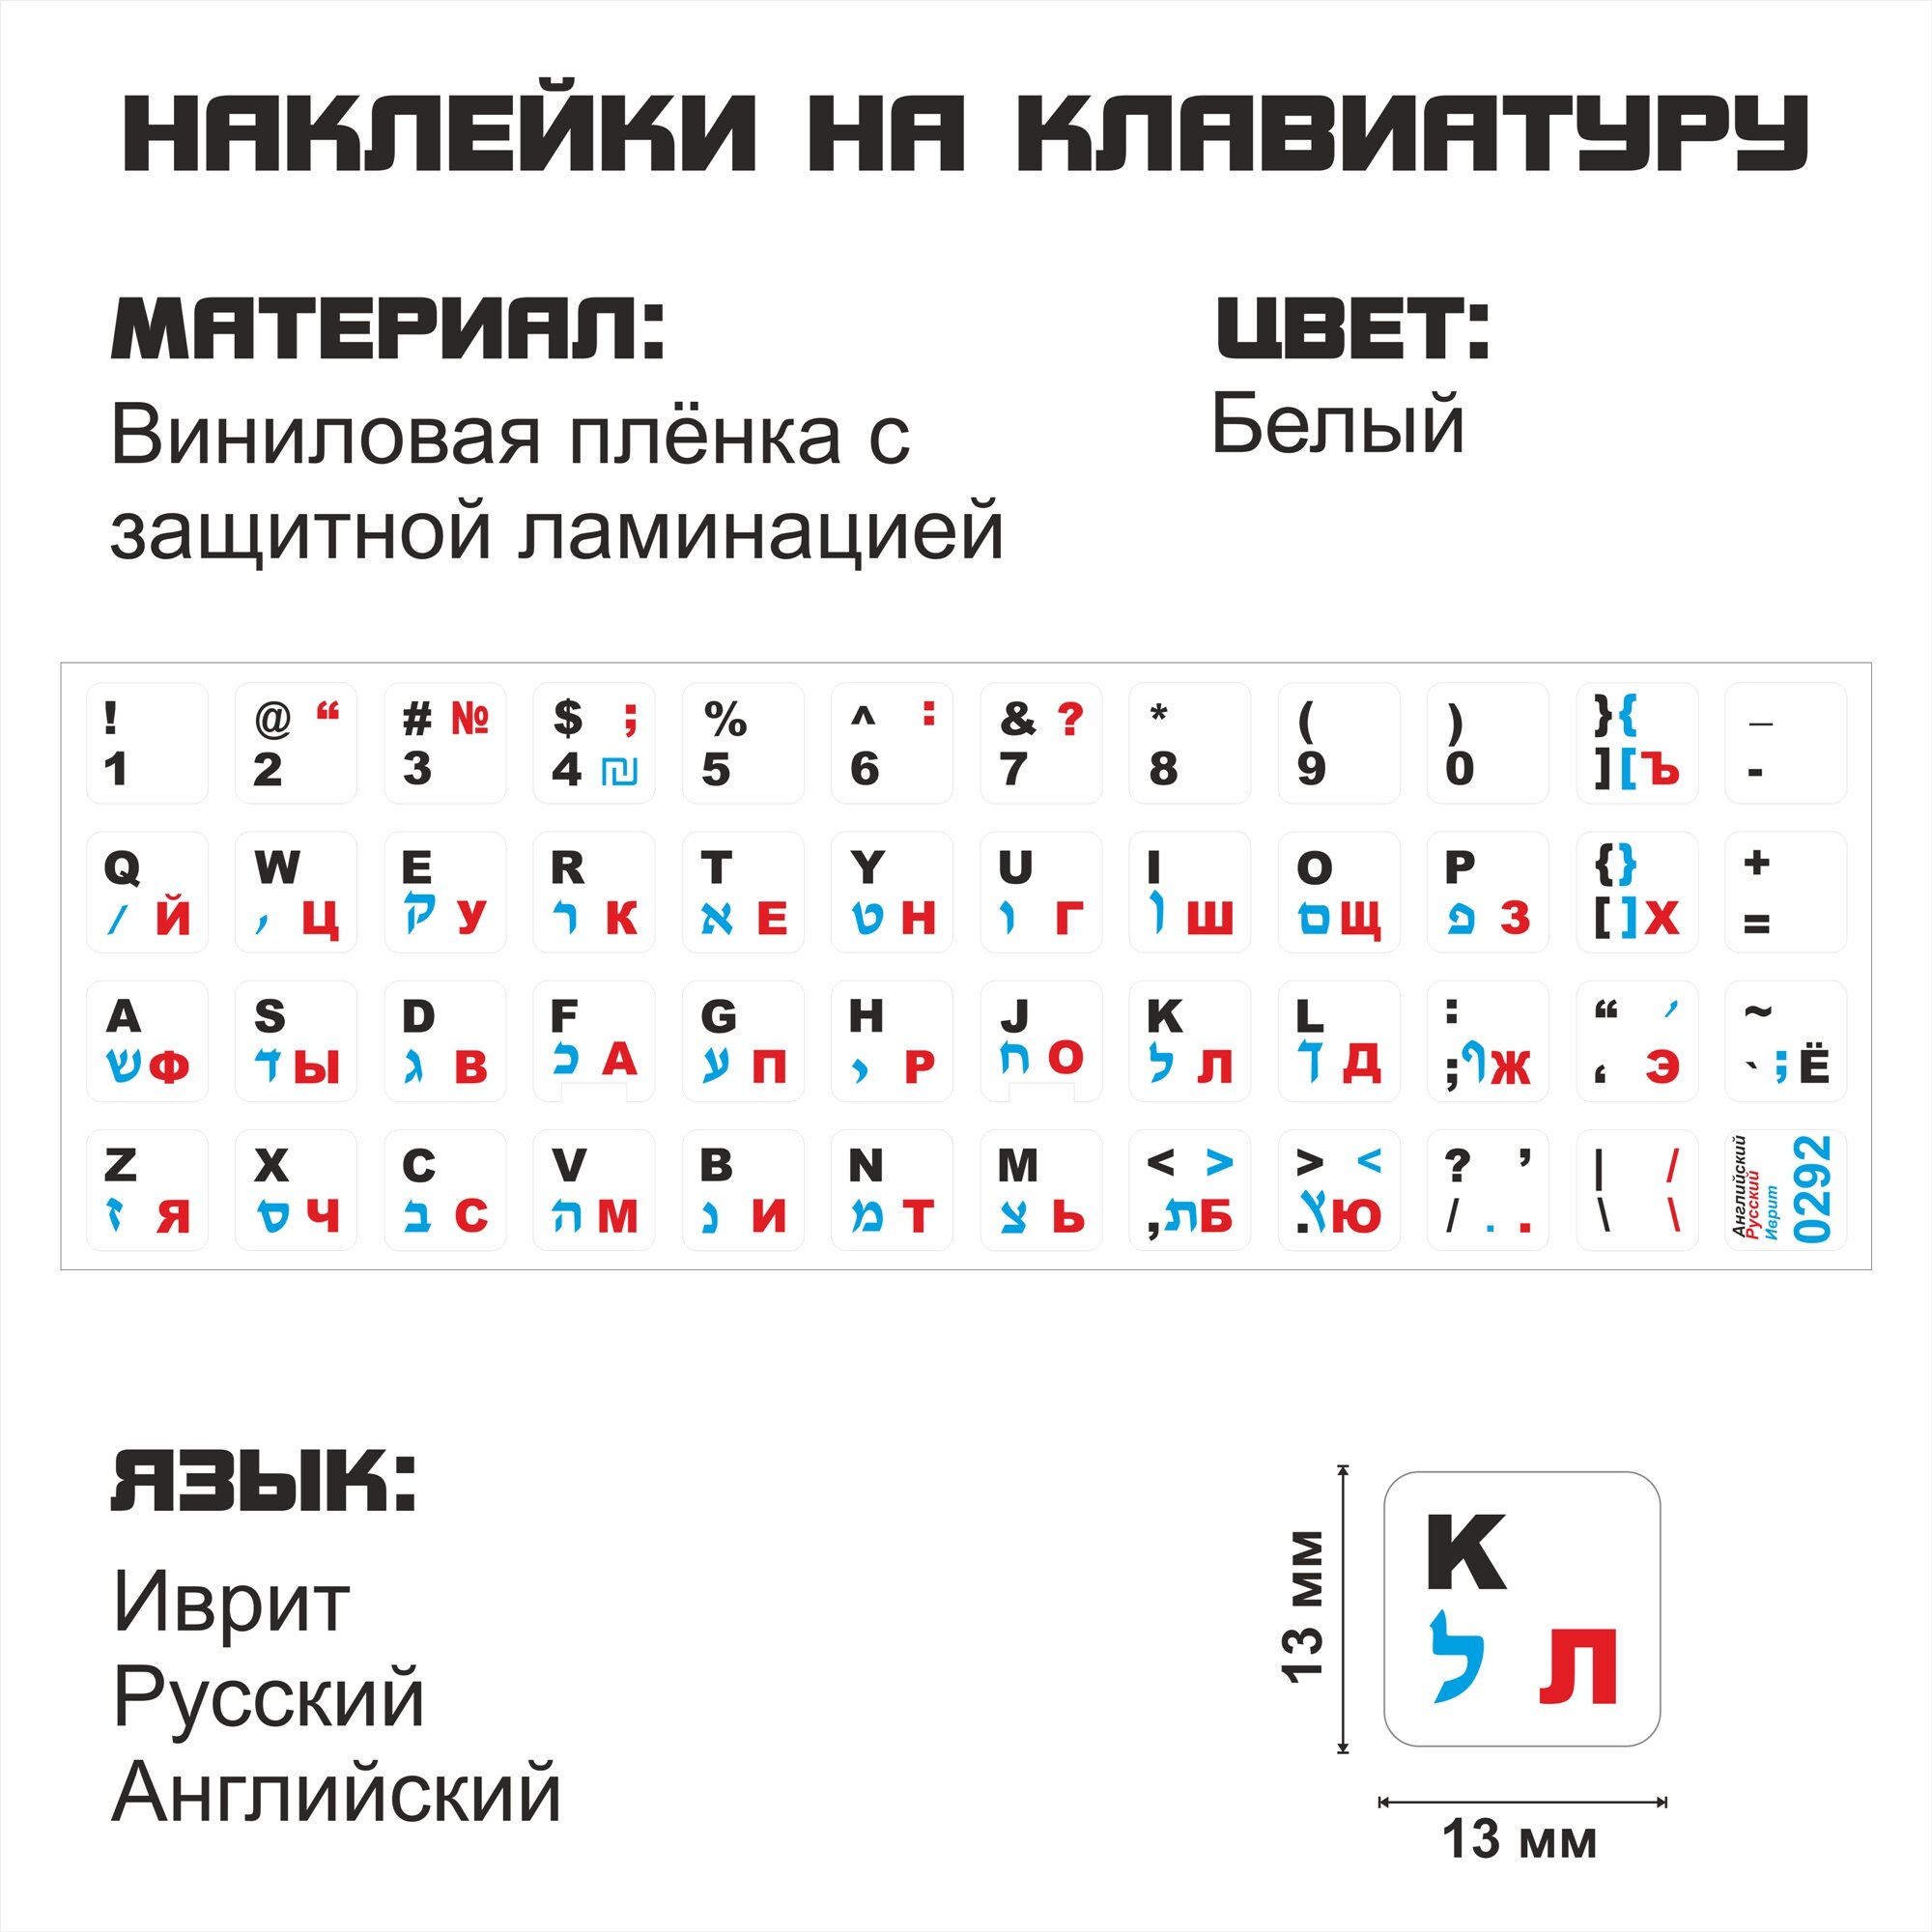 Иврит, Английские, Русские наклейки на клавиатуру 13x13 мм.